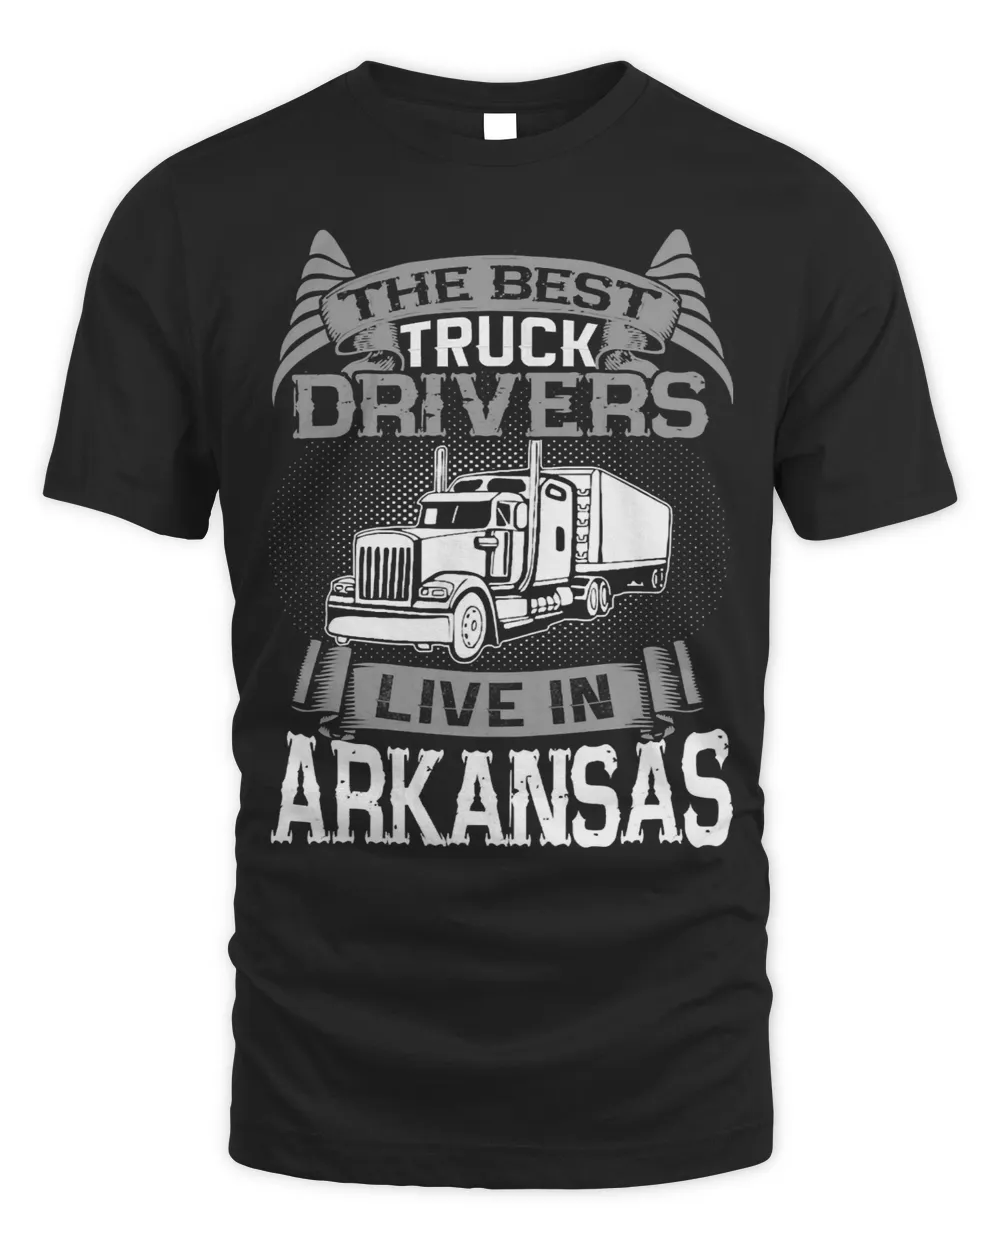 Truck Lover Trucker Arkansas s Arkansas Truck Driver269 Trucks